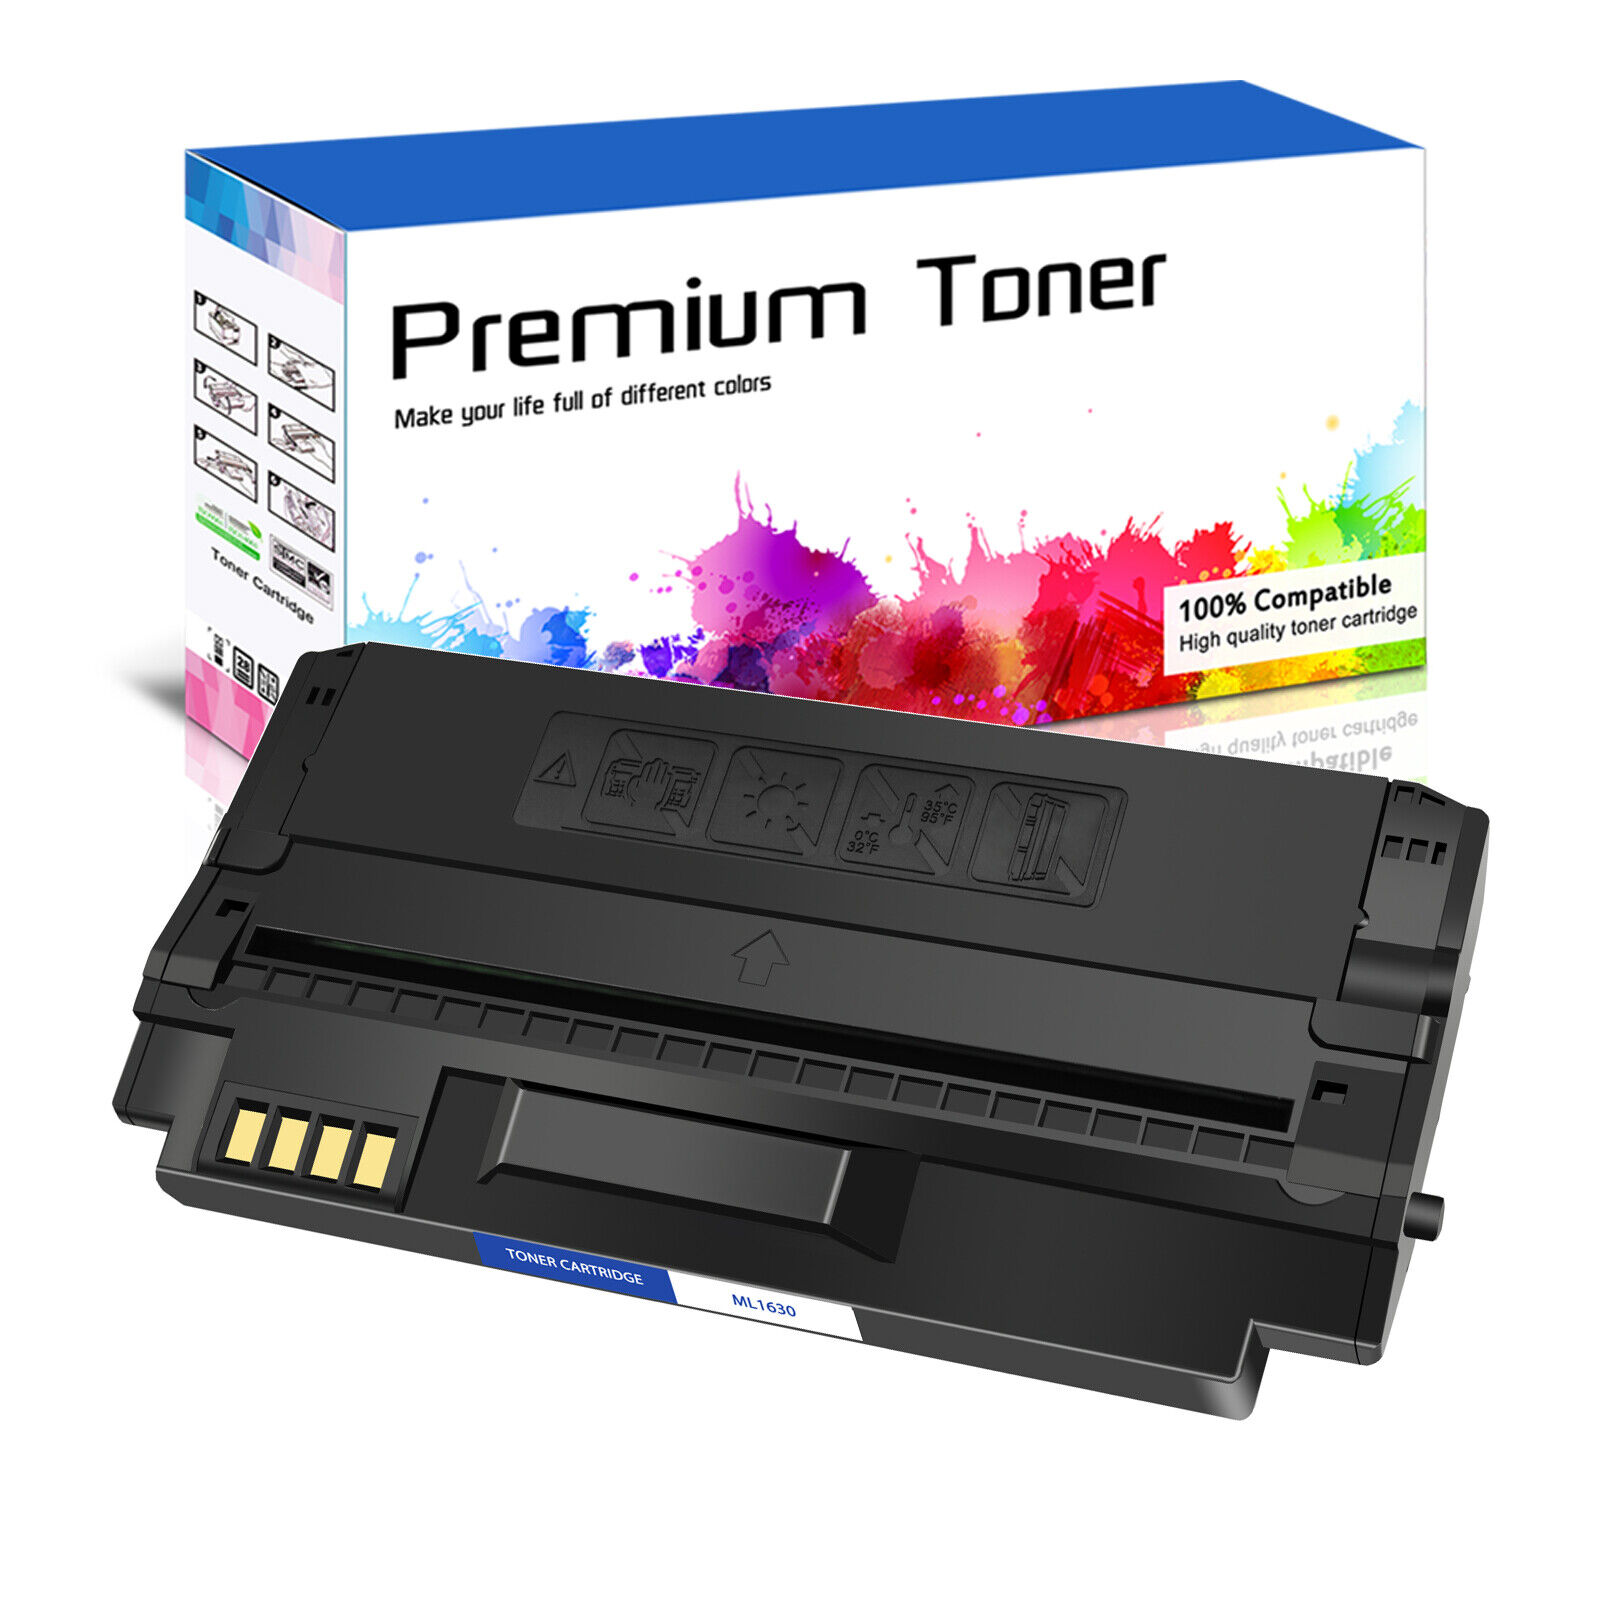 1 - Pack ML1630 Black High Yield Toner Cartridge for Samsung SCX-4500 SCX-4500W